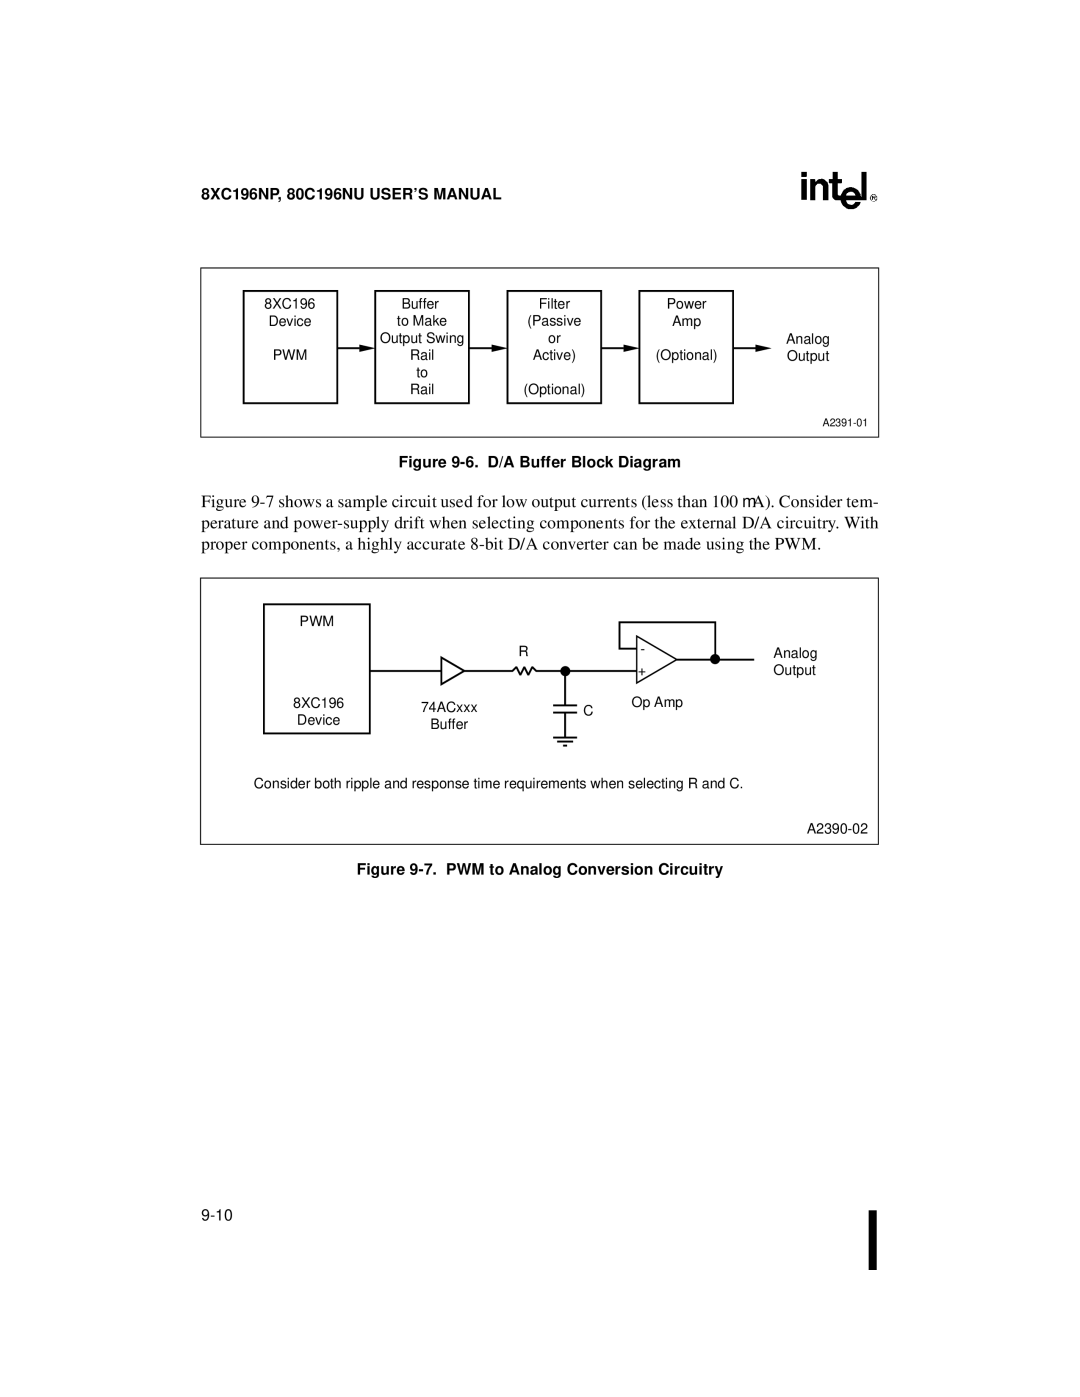 Intel 80C196NU, 8XC196NP, Microcontroller manual D/A Buffer Block Diagram 